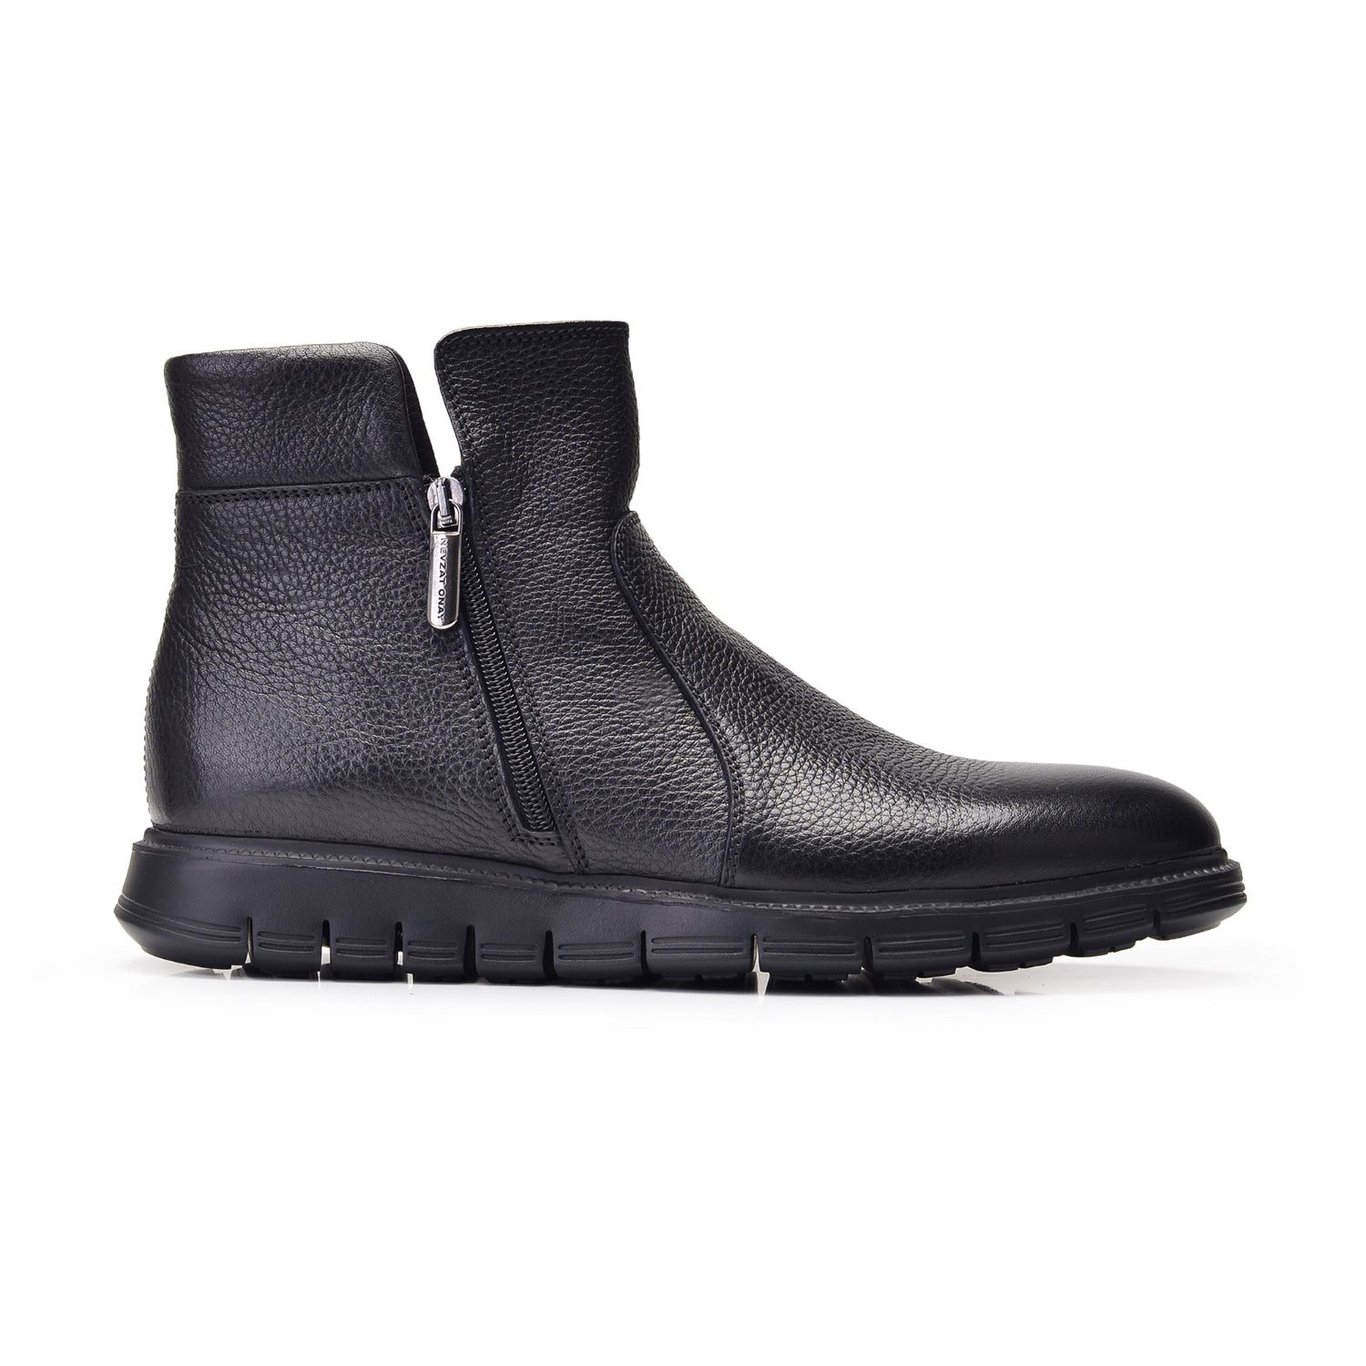 Nevzat Onay Genuine Leather Black Men Boots  -11842-